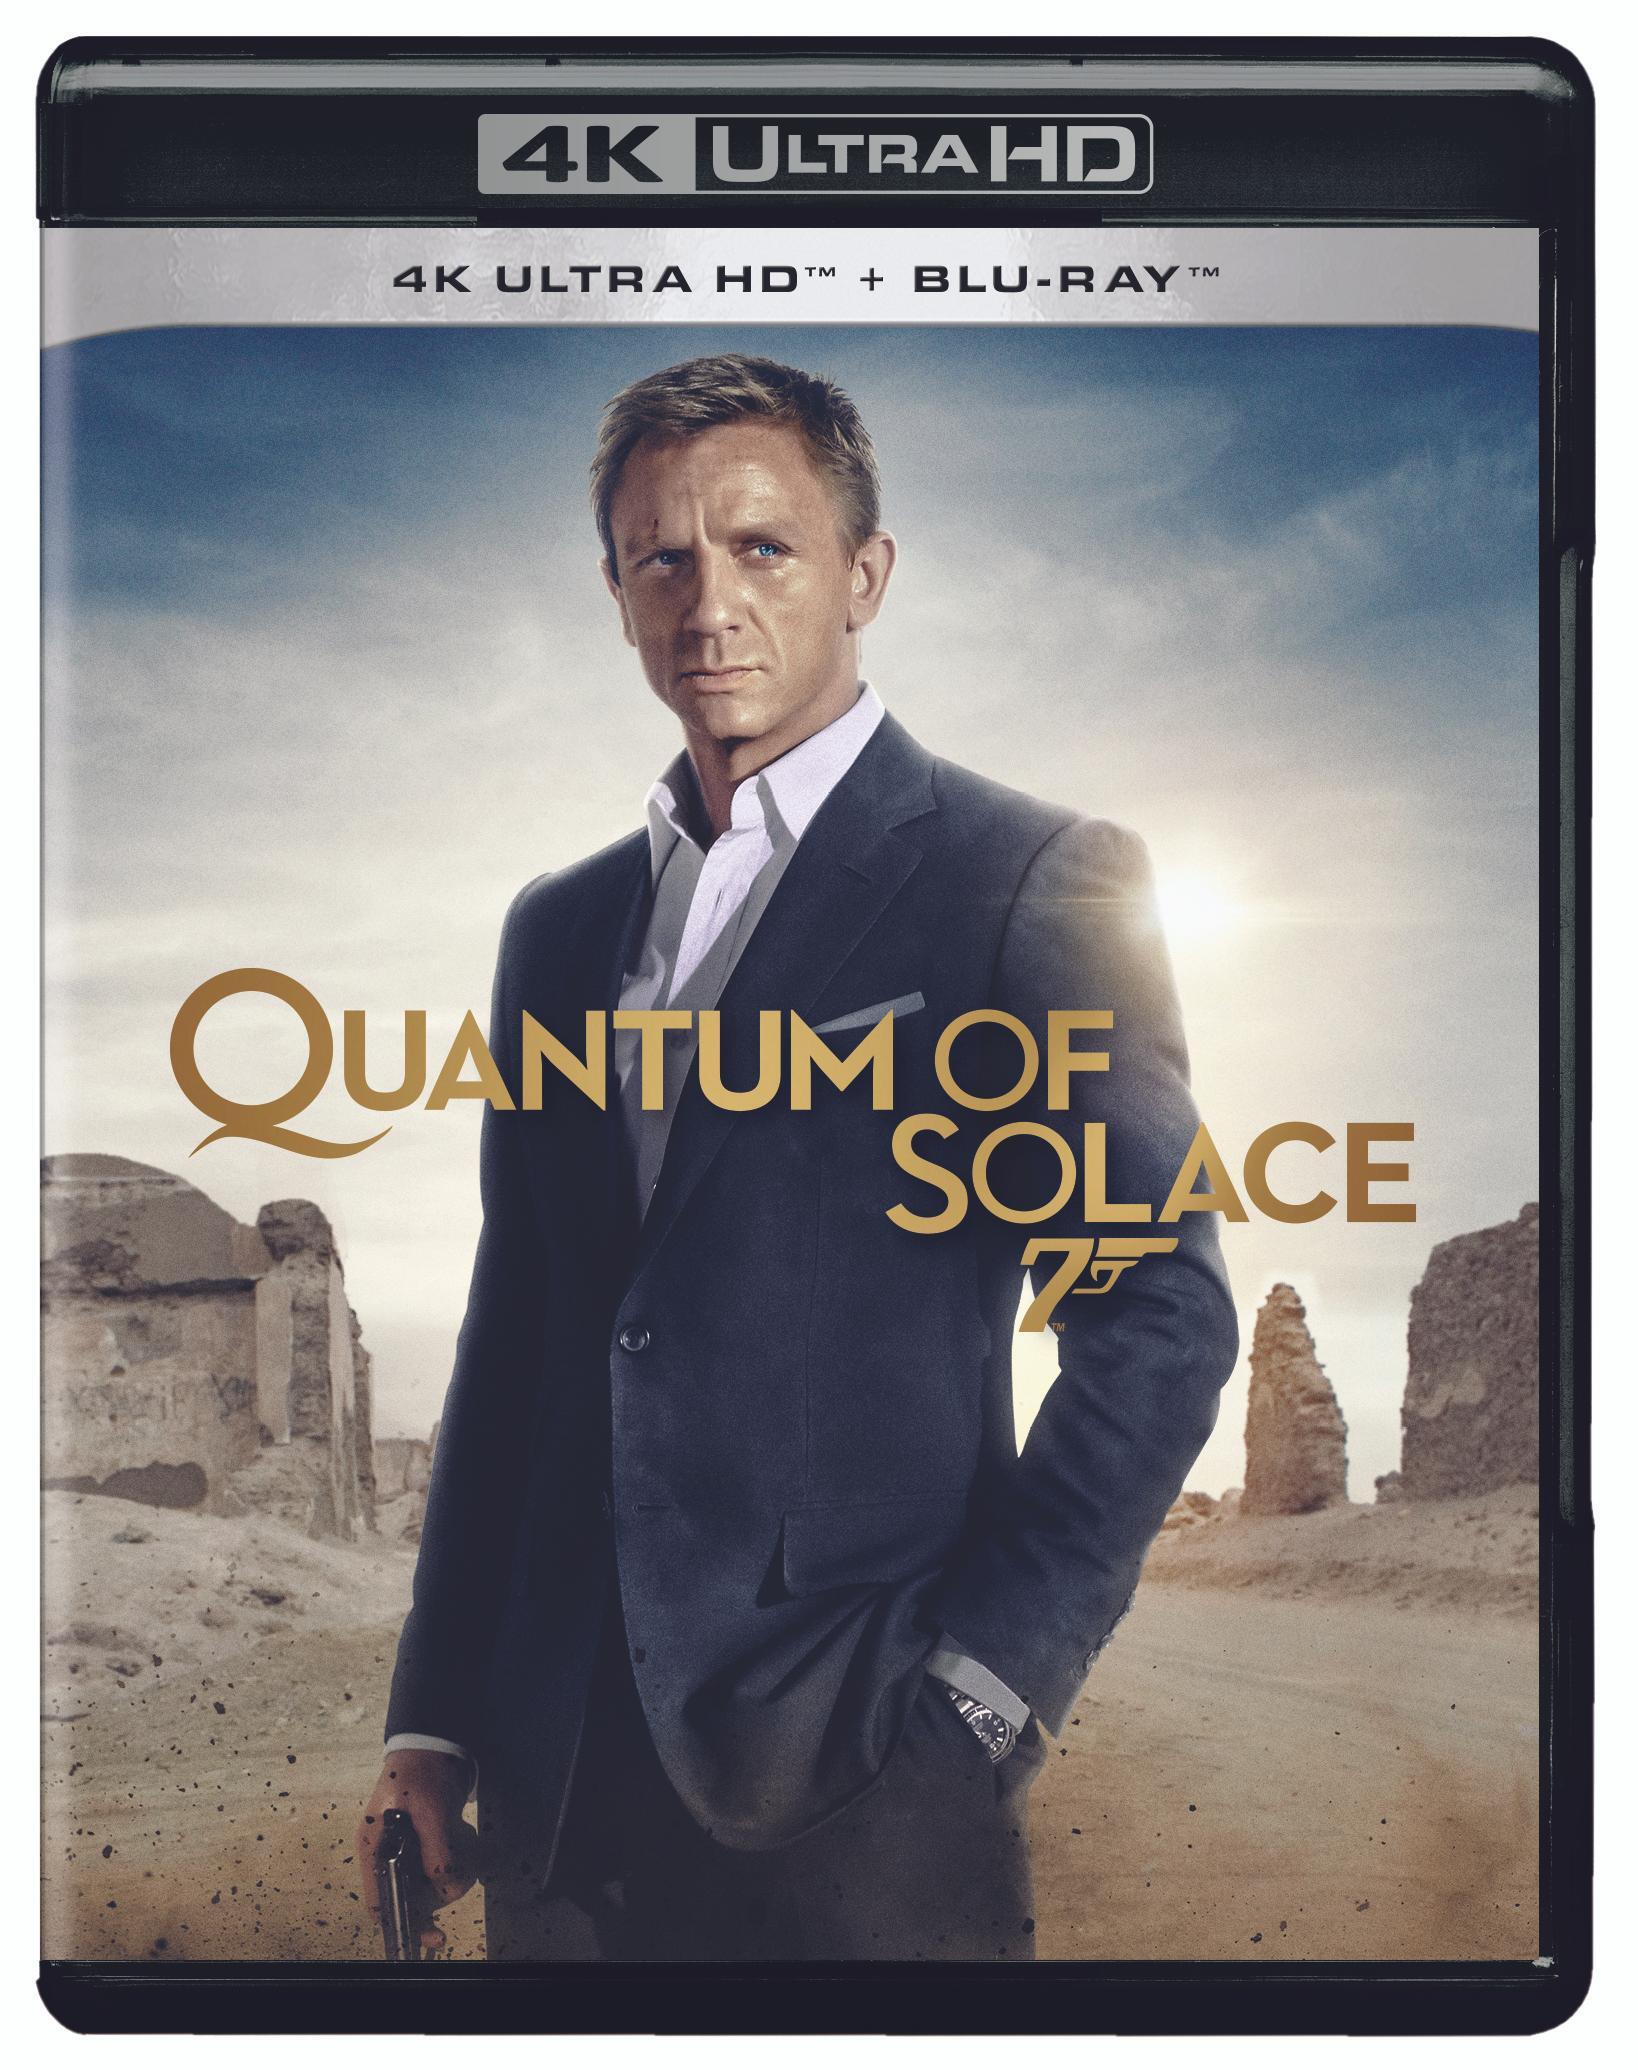 Quantum Of Solace (4K Ultra HD + Blu-ray) - UHD [ 2008 ]  - Action Movies On 4K Ultra HD Blu-ray - Movies On GRUV